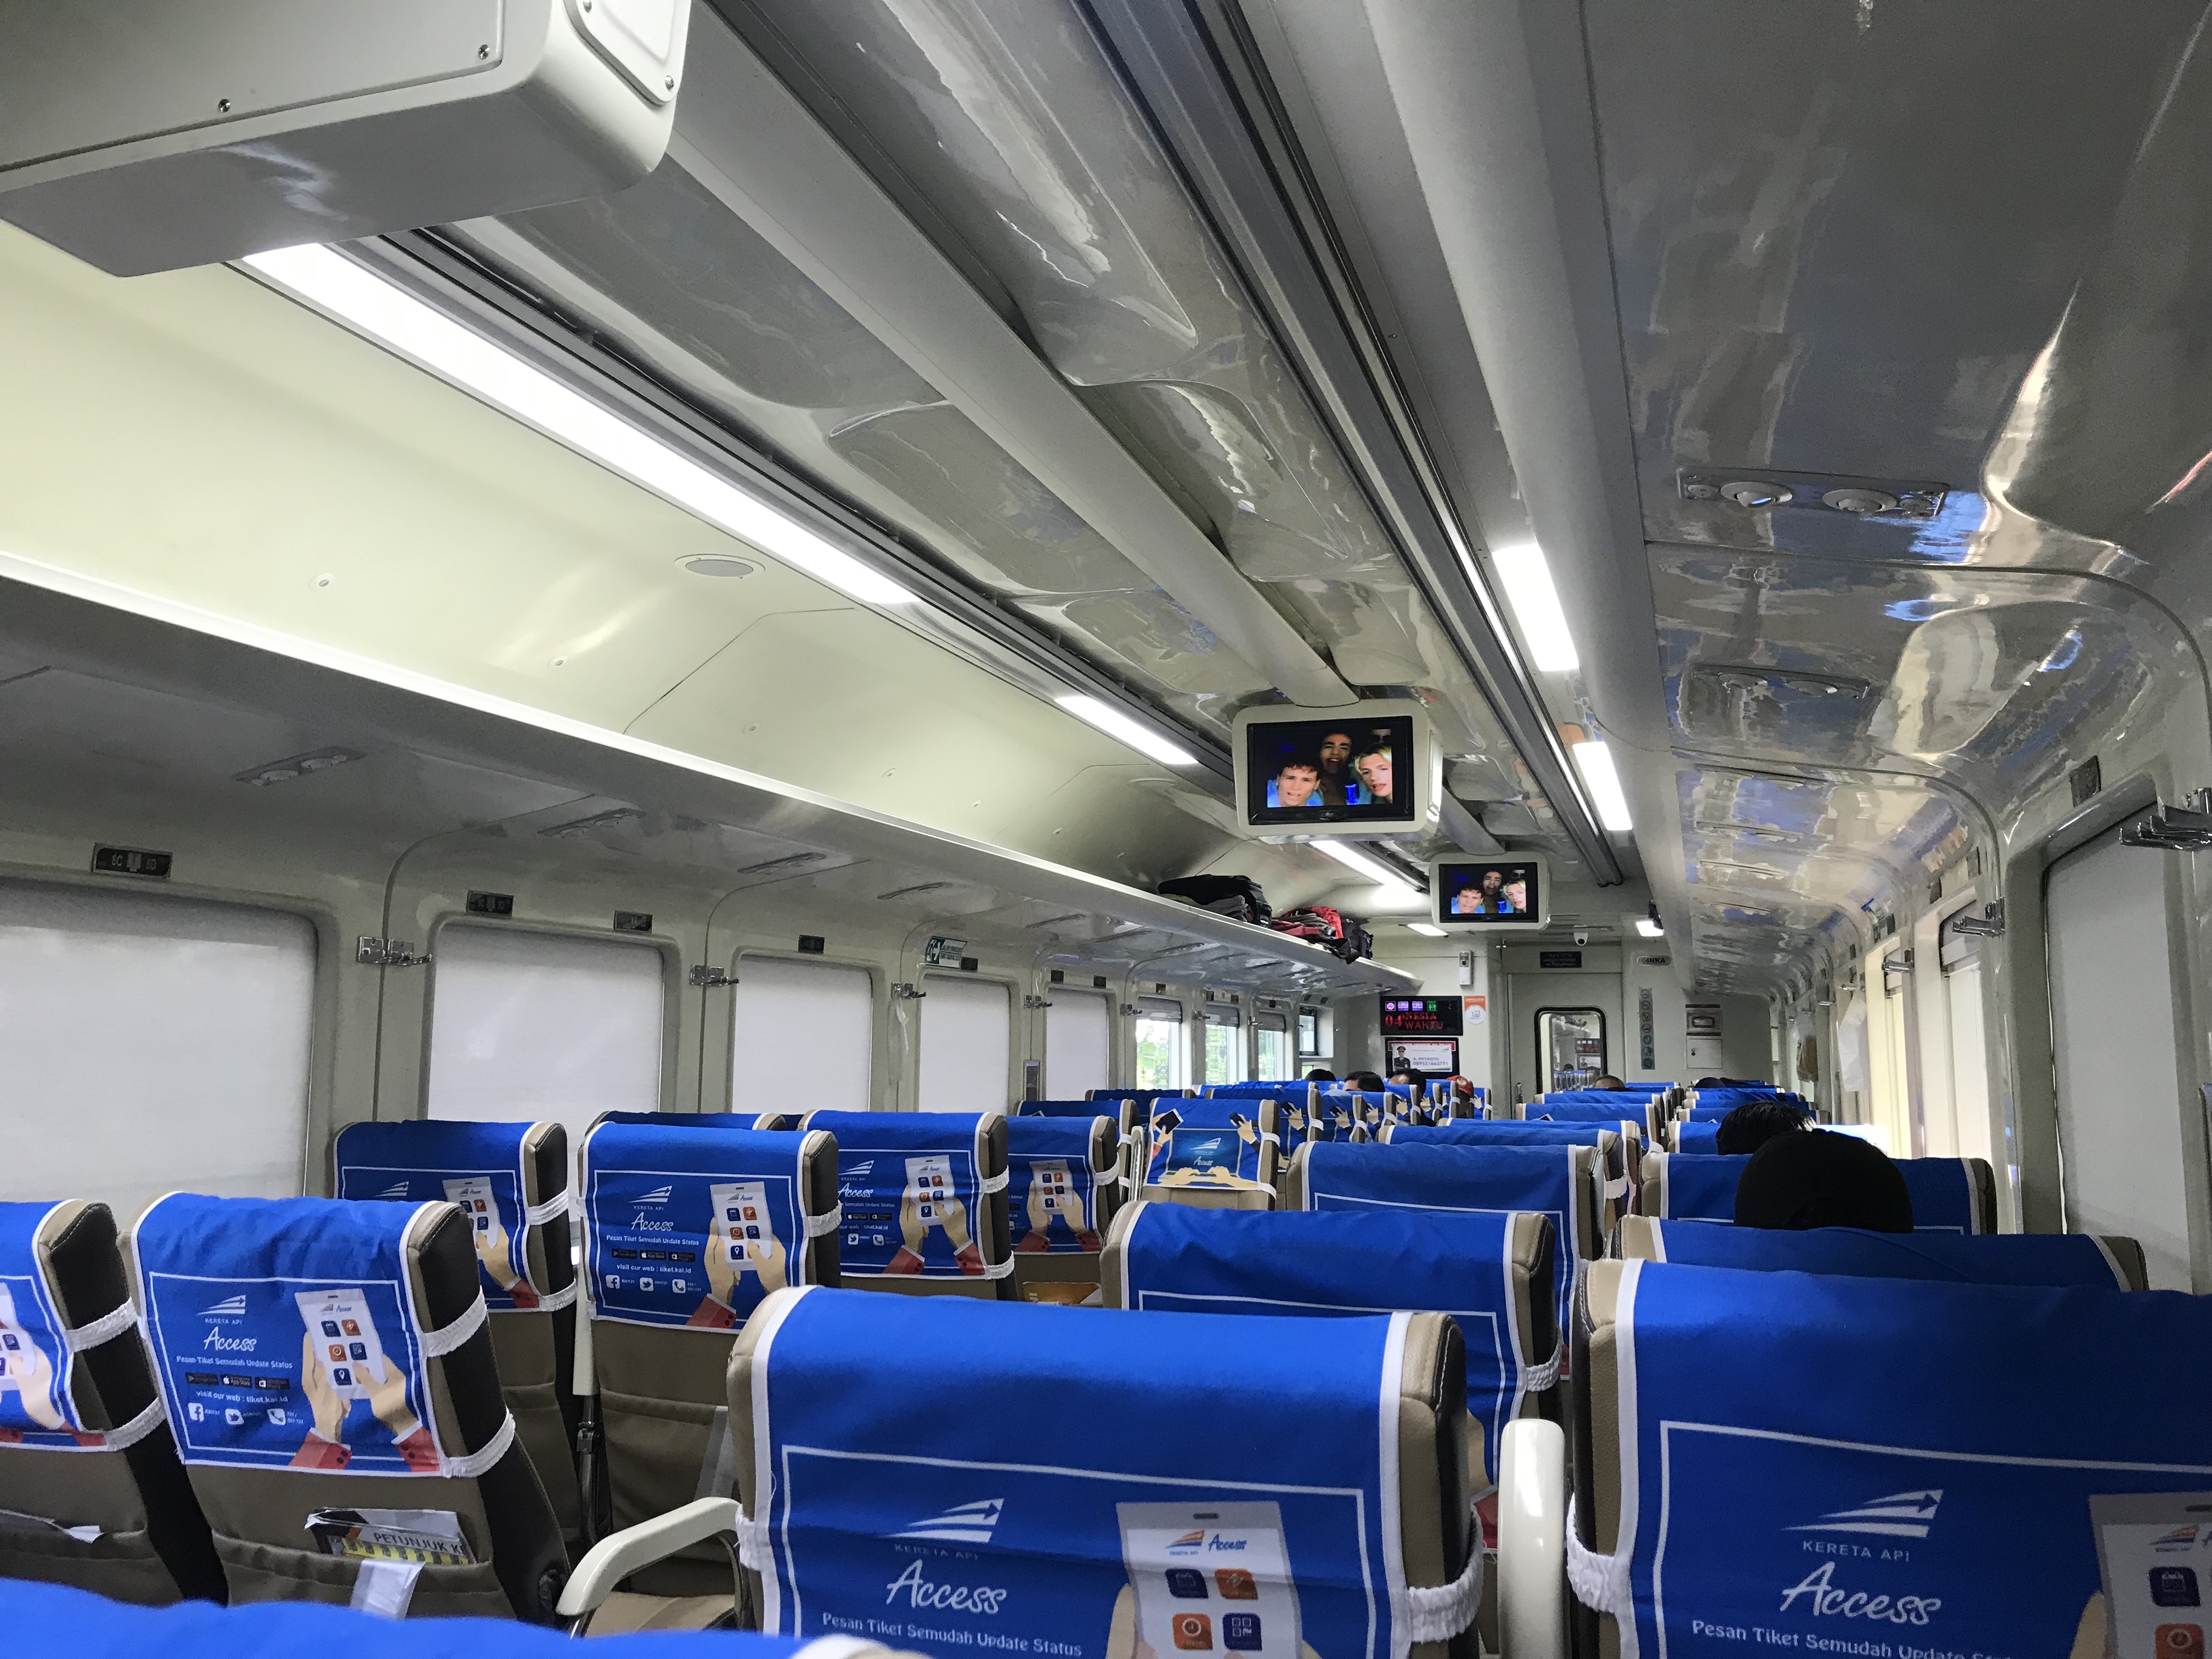 Jayakarta Premium : Bukan Kereta Ekonomi Biasa – Ganes' Blog